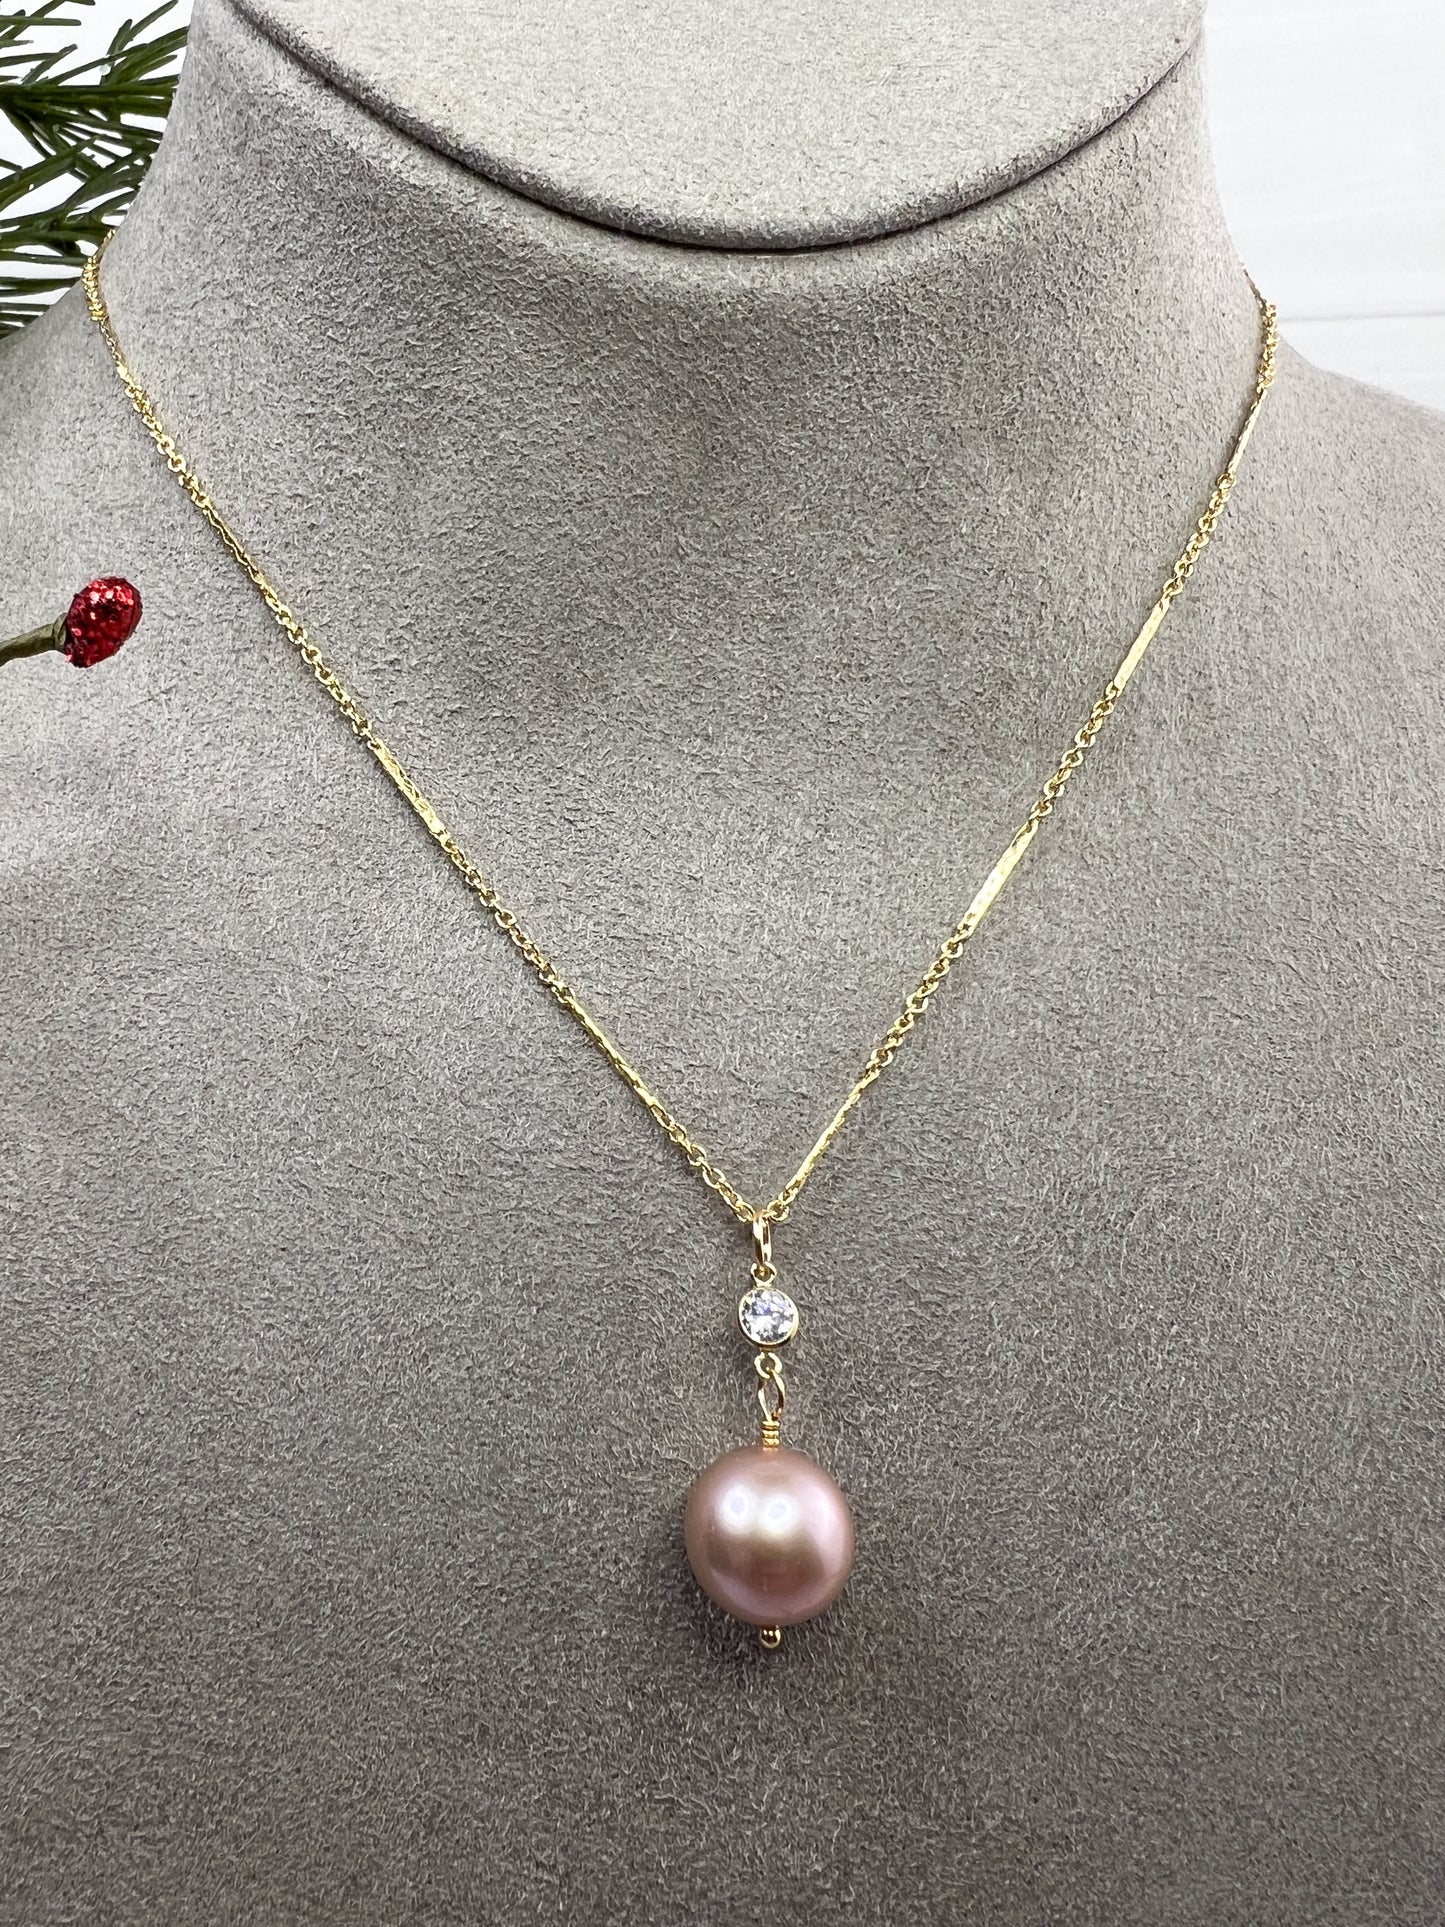 Edison Pearl & CZ necklace